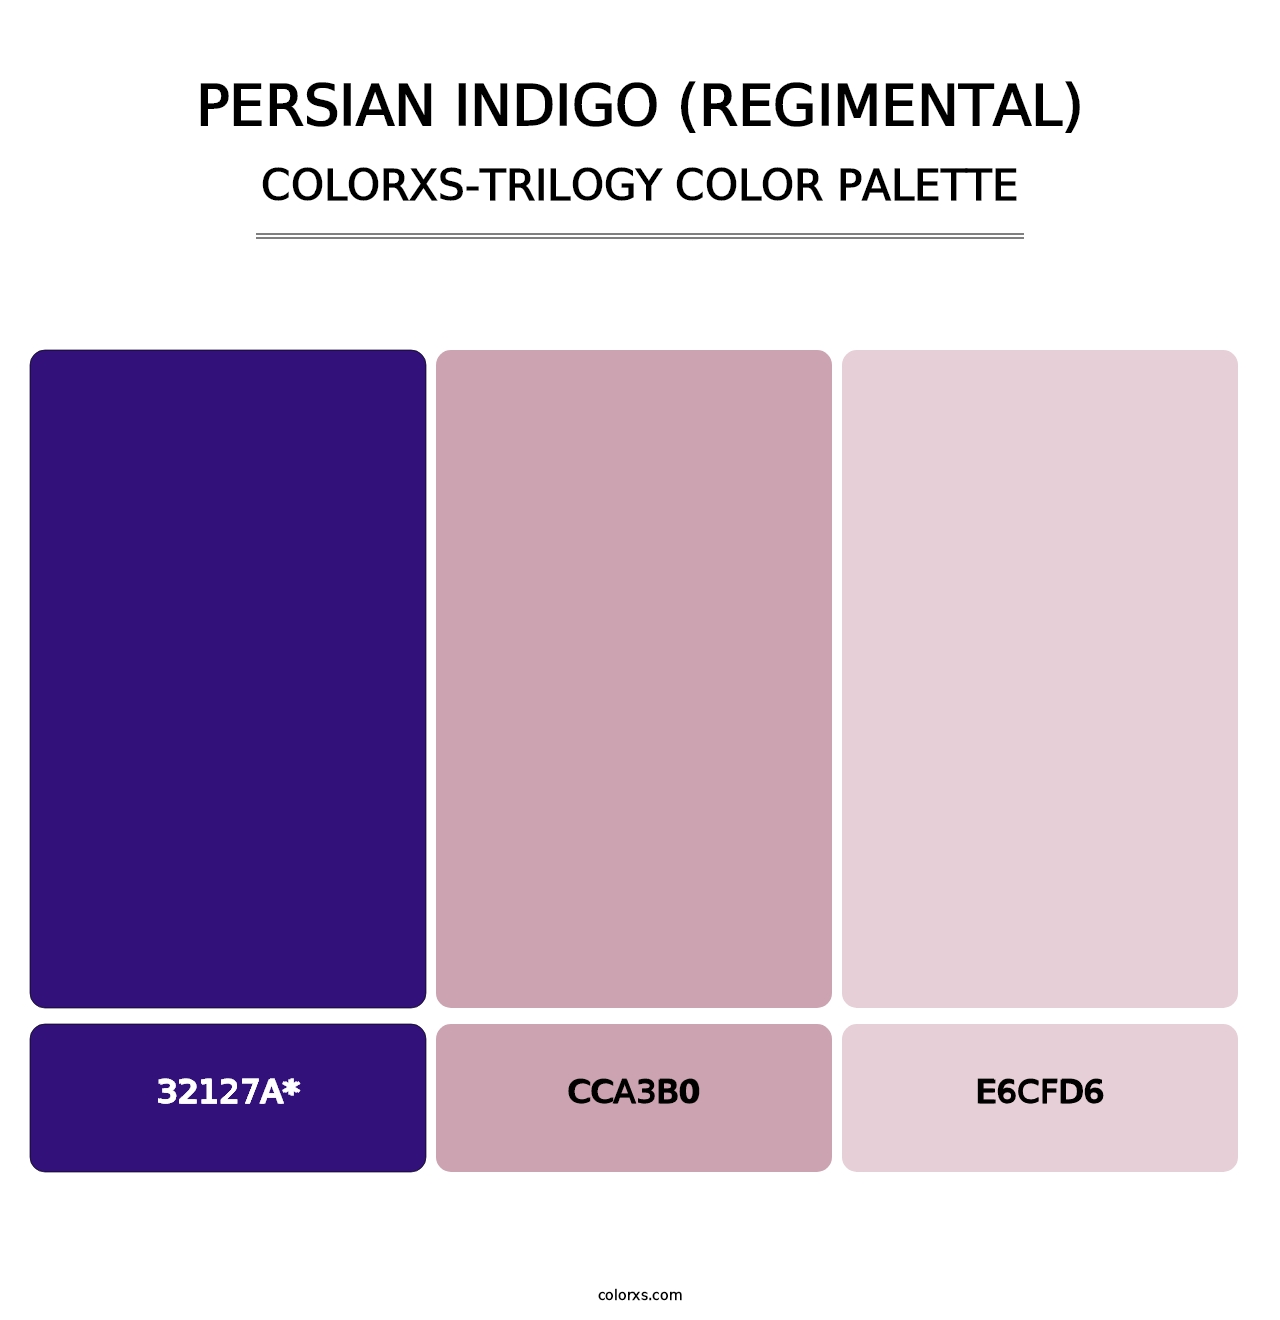 Persian Indigo (Regimental) - Colorxs Trilogy Palette